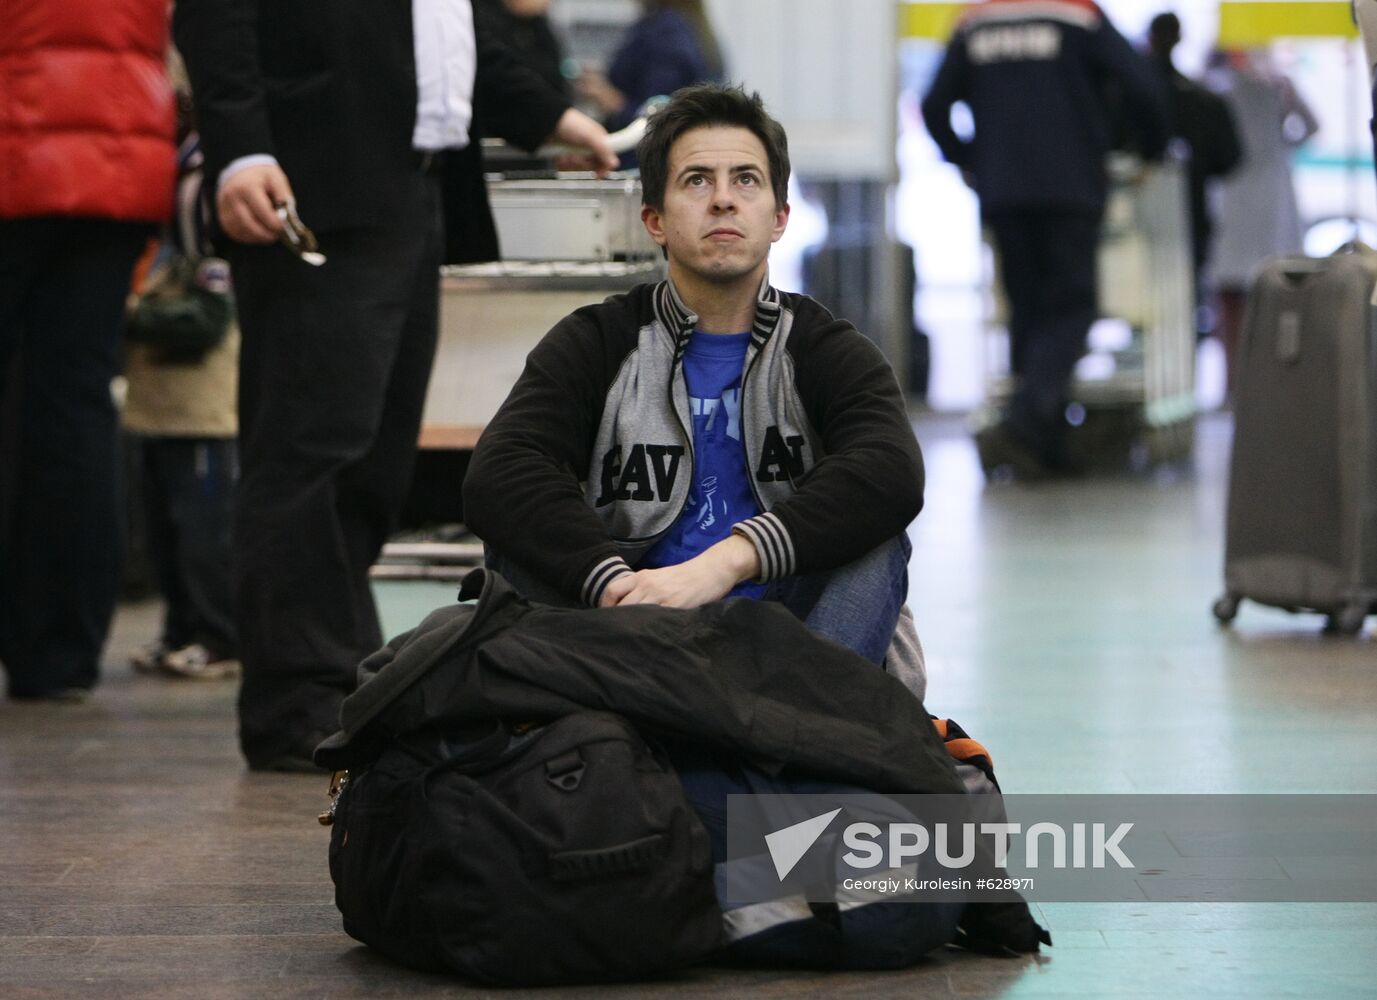 Passenger of cancelled flight at Sheremetyevo airport